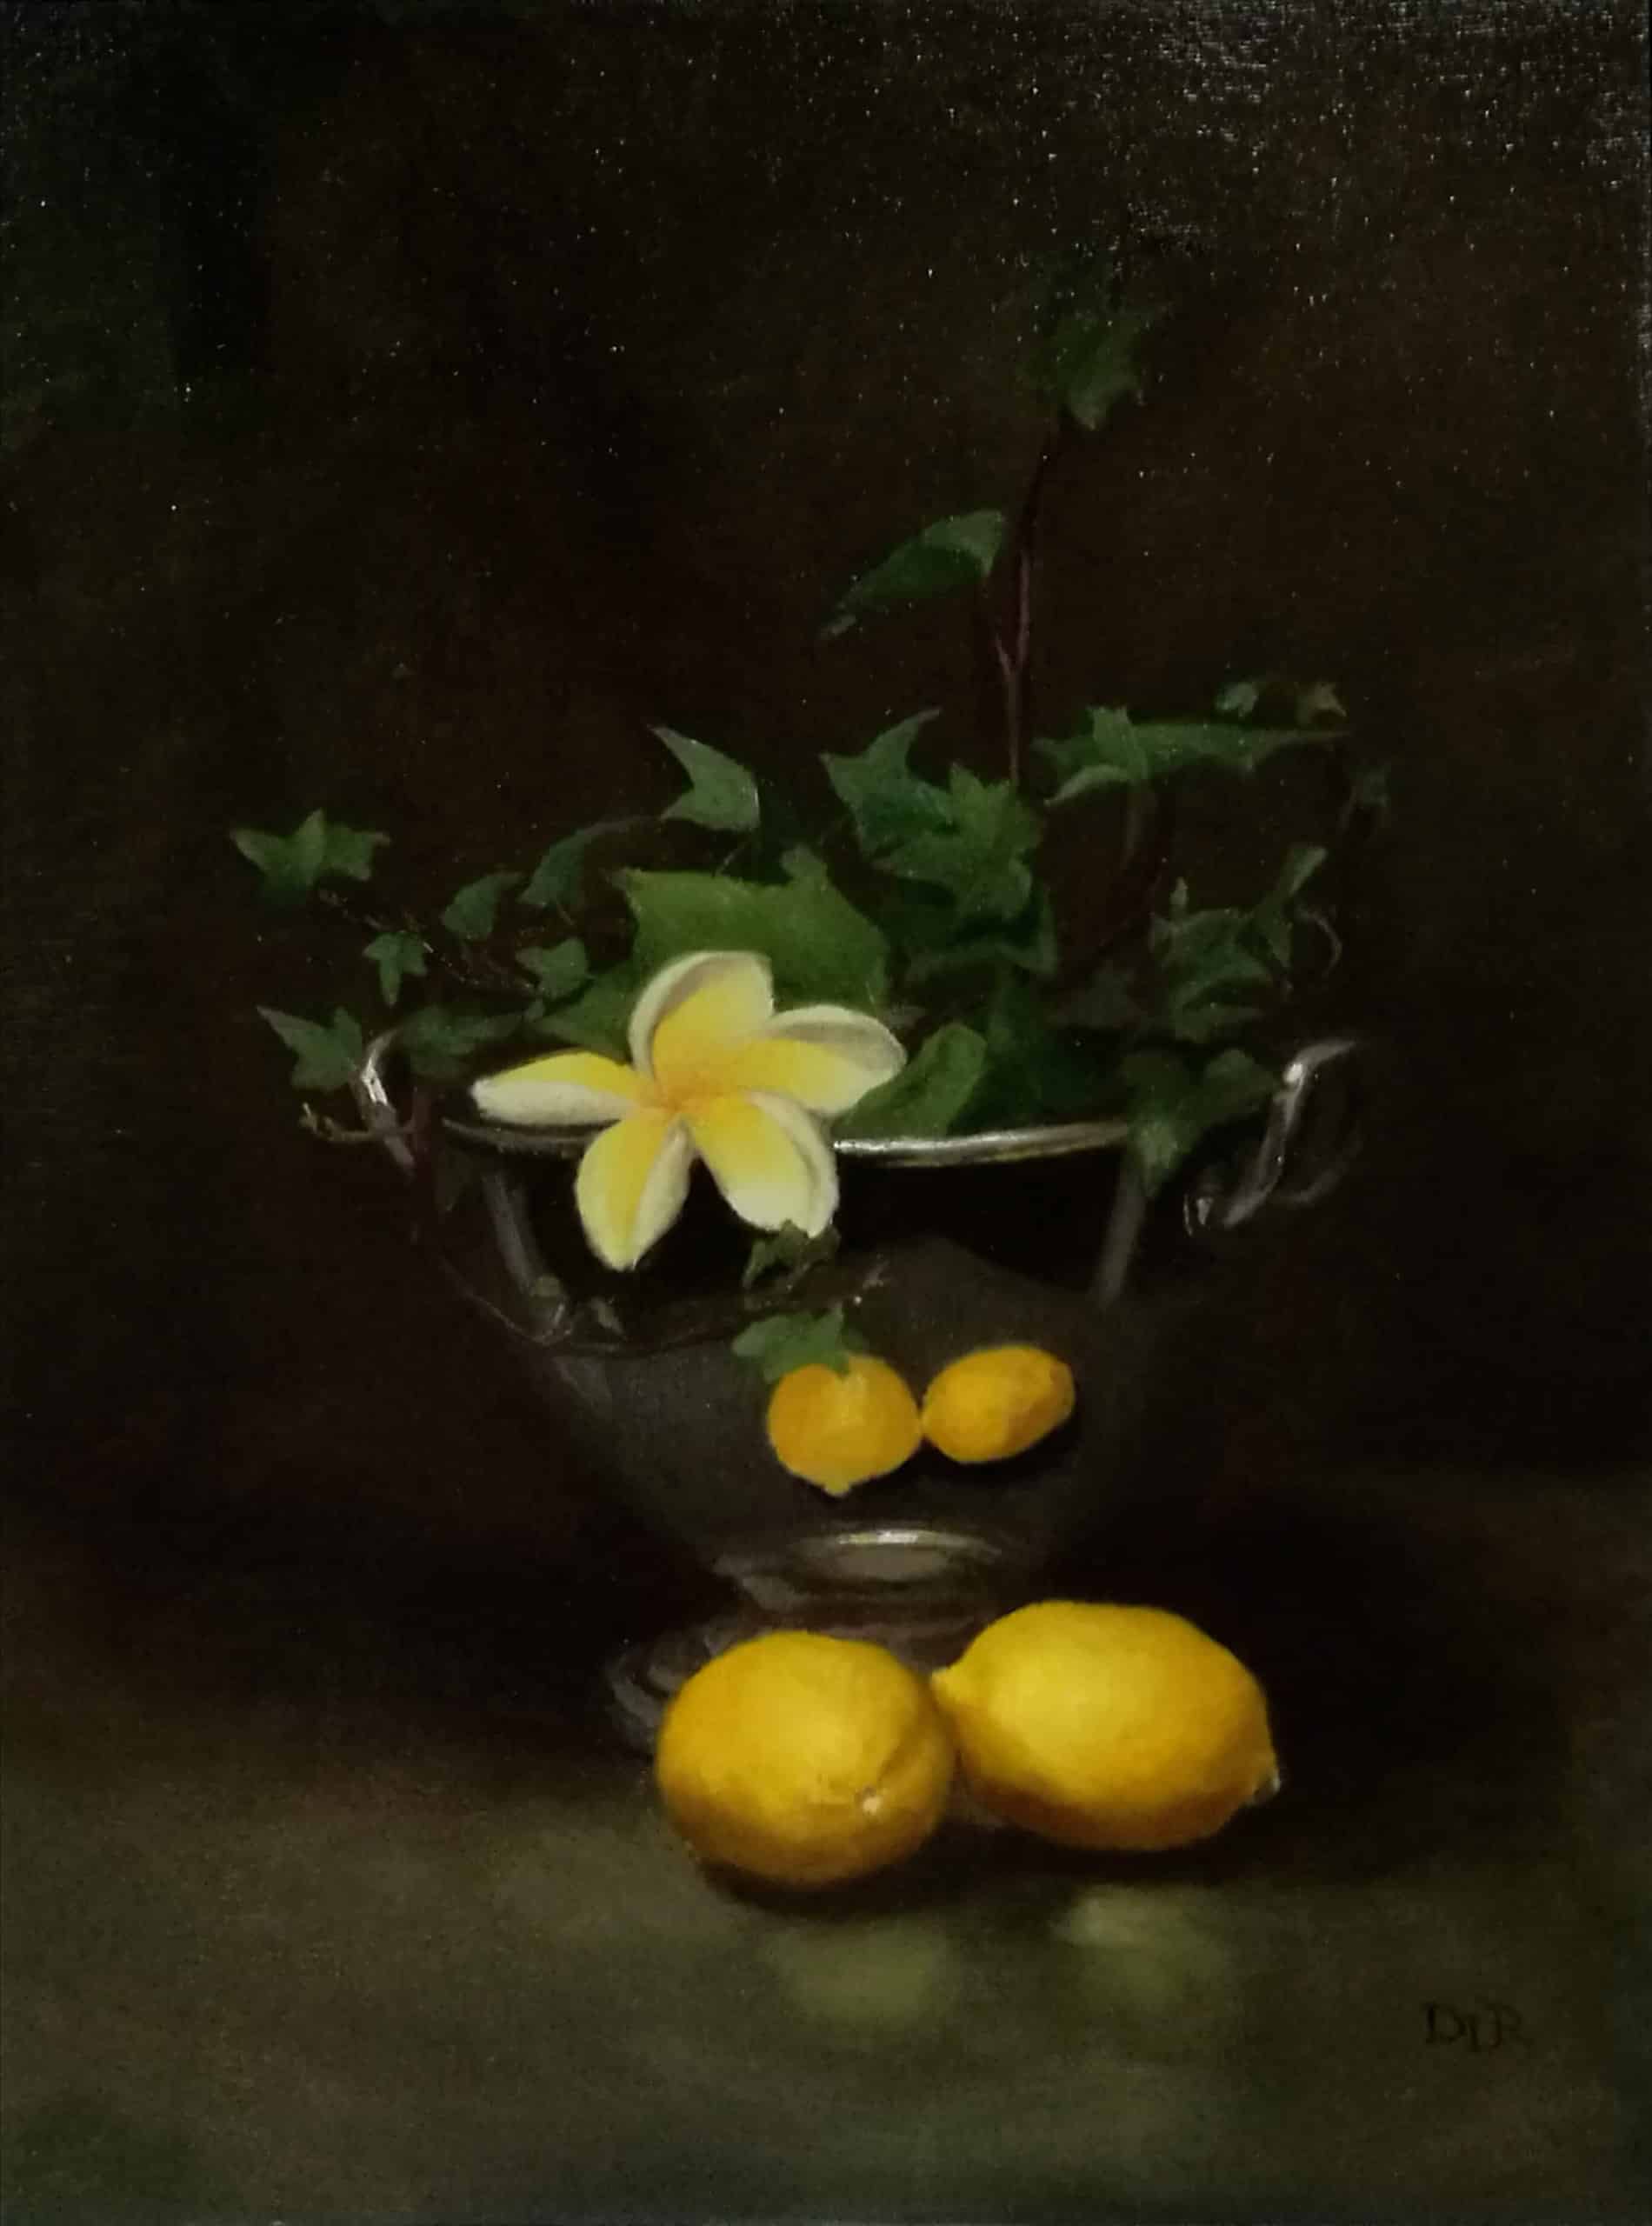 Daniela Roughsedge, "Still life with ivy lemons and frangipani", Oil on canvas board, 30 x 40 cm, 2020